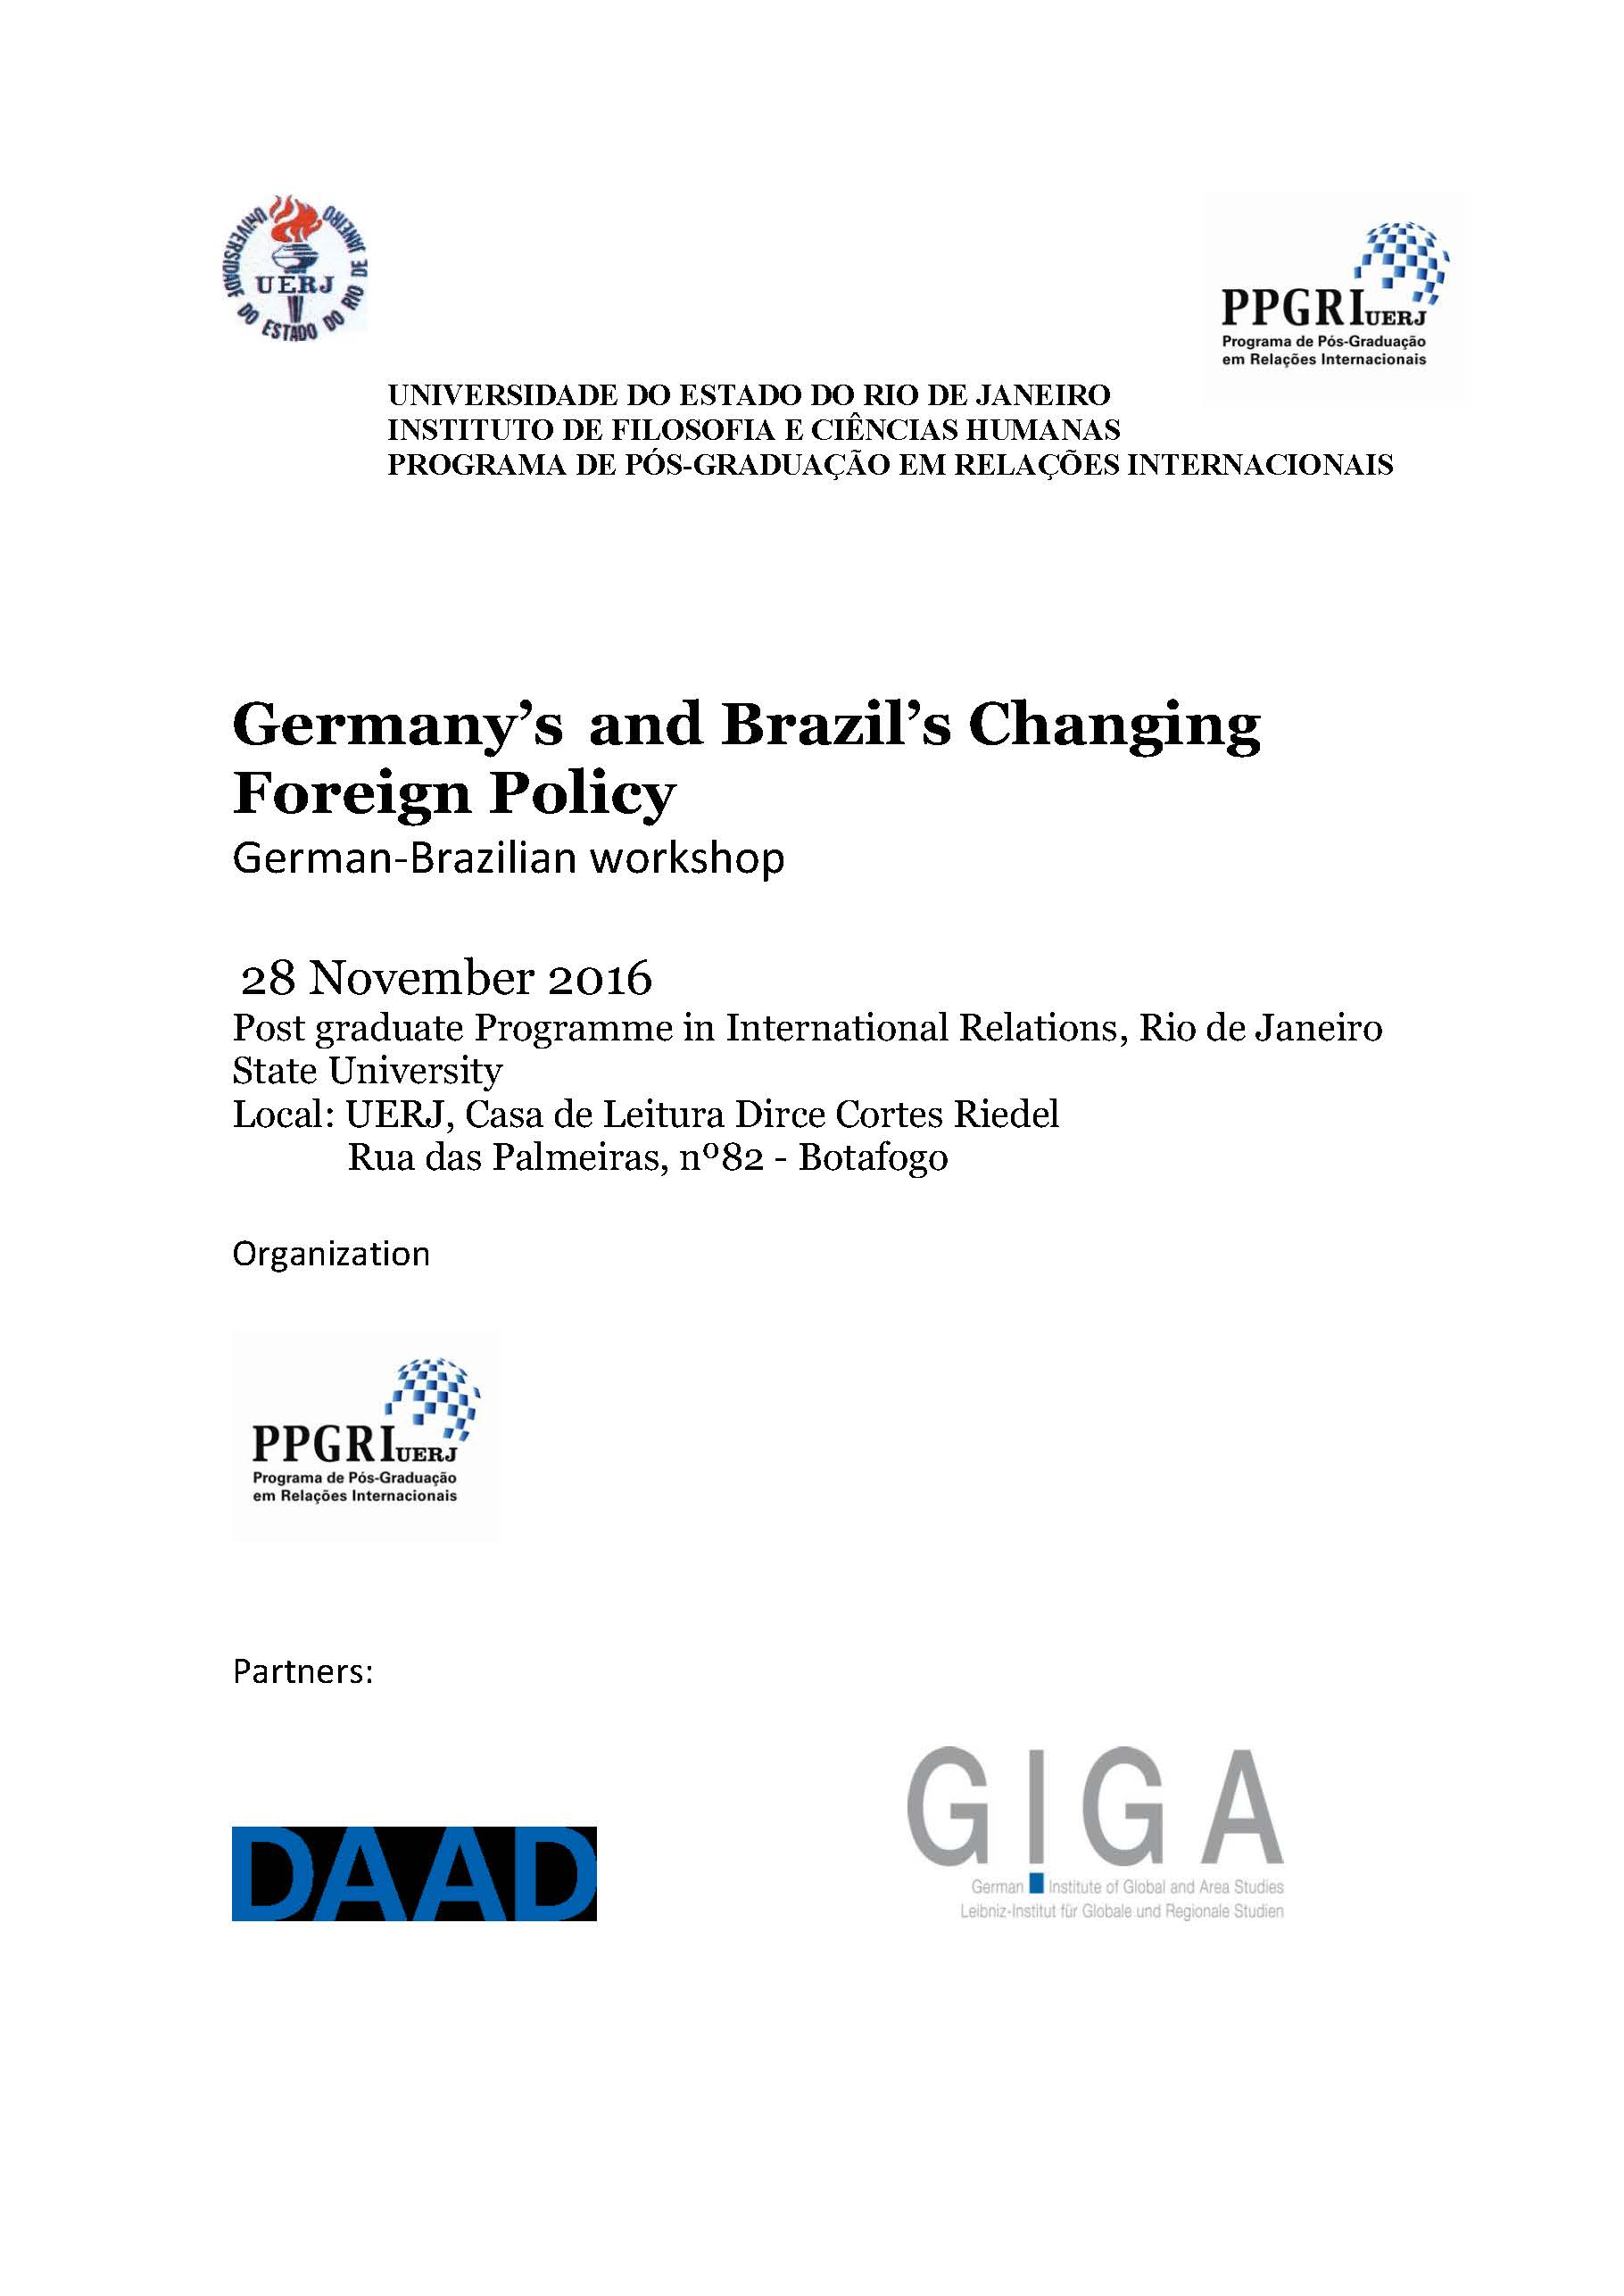 germanys-and-brazils-fp-28-11-2016_pagina_1